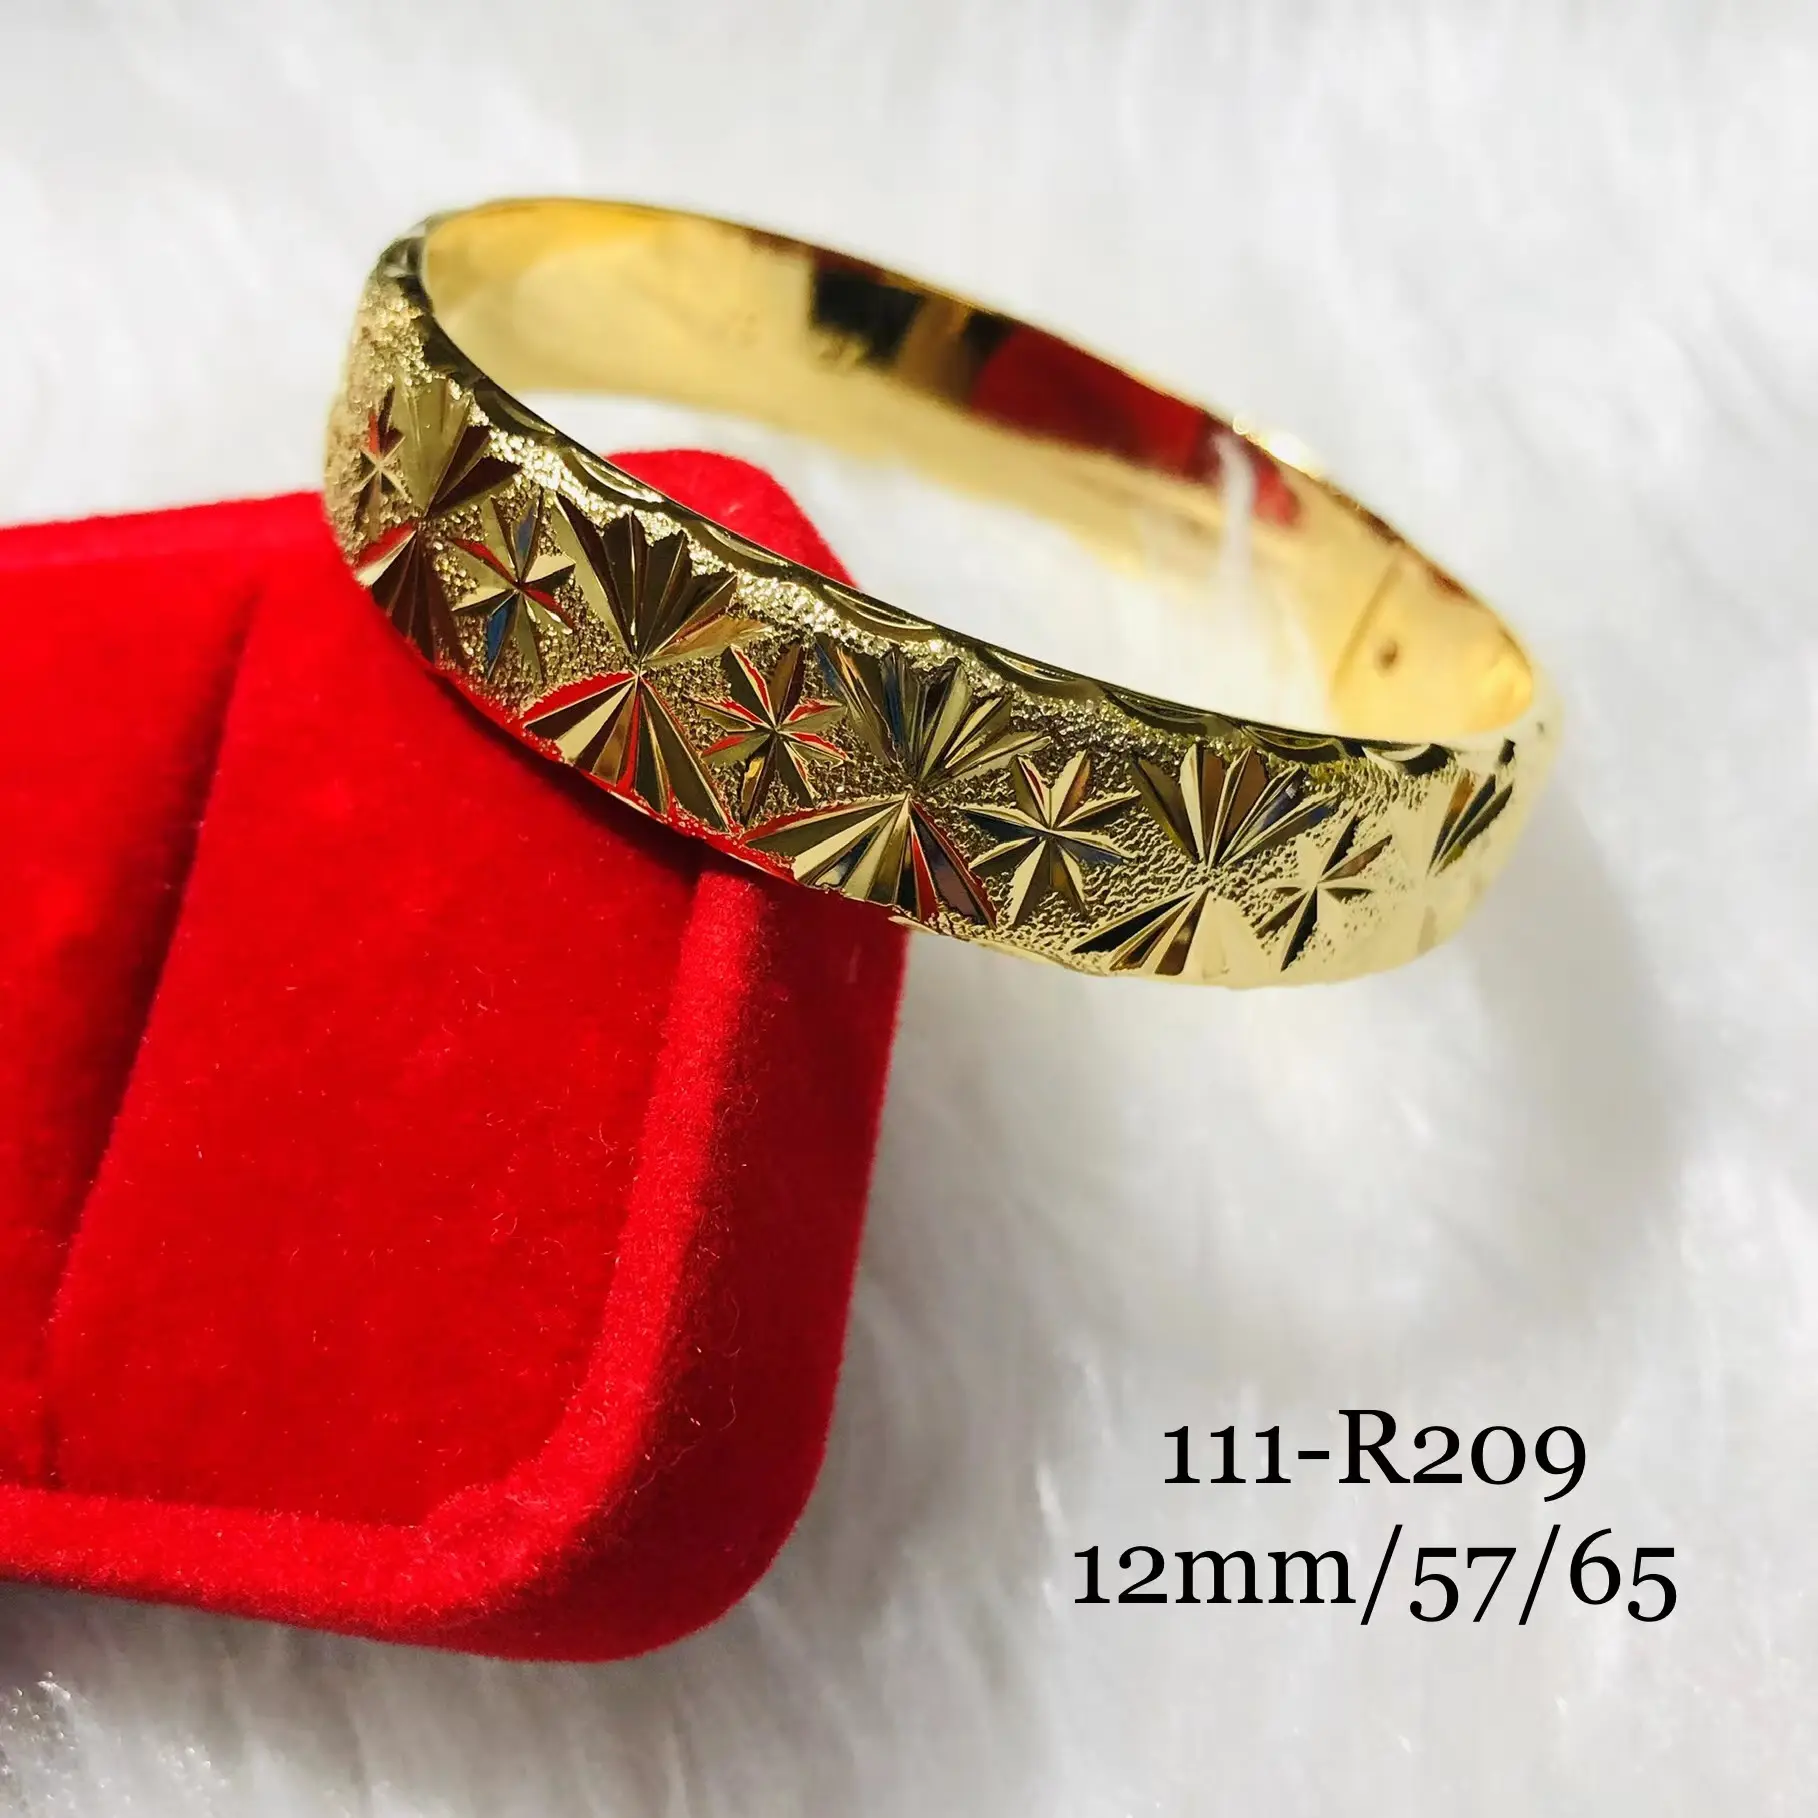 212 xuping jewelry Fashion Assortment of Beautifully Embroidered Bridal Wedding 24k Gold Plated bangle